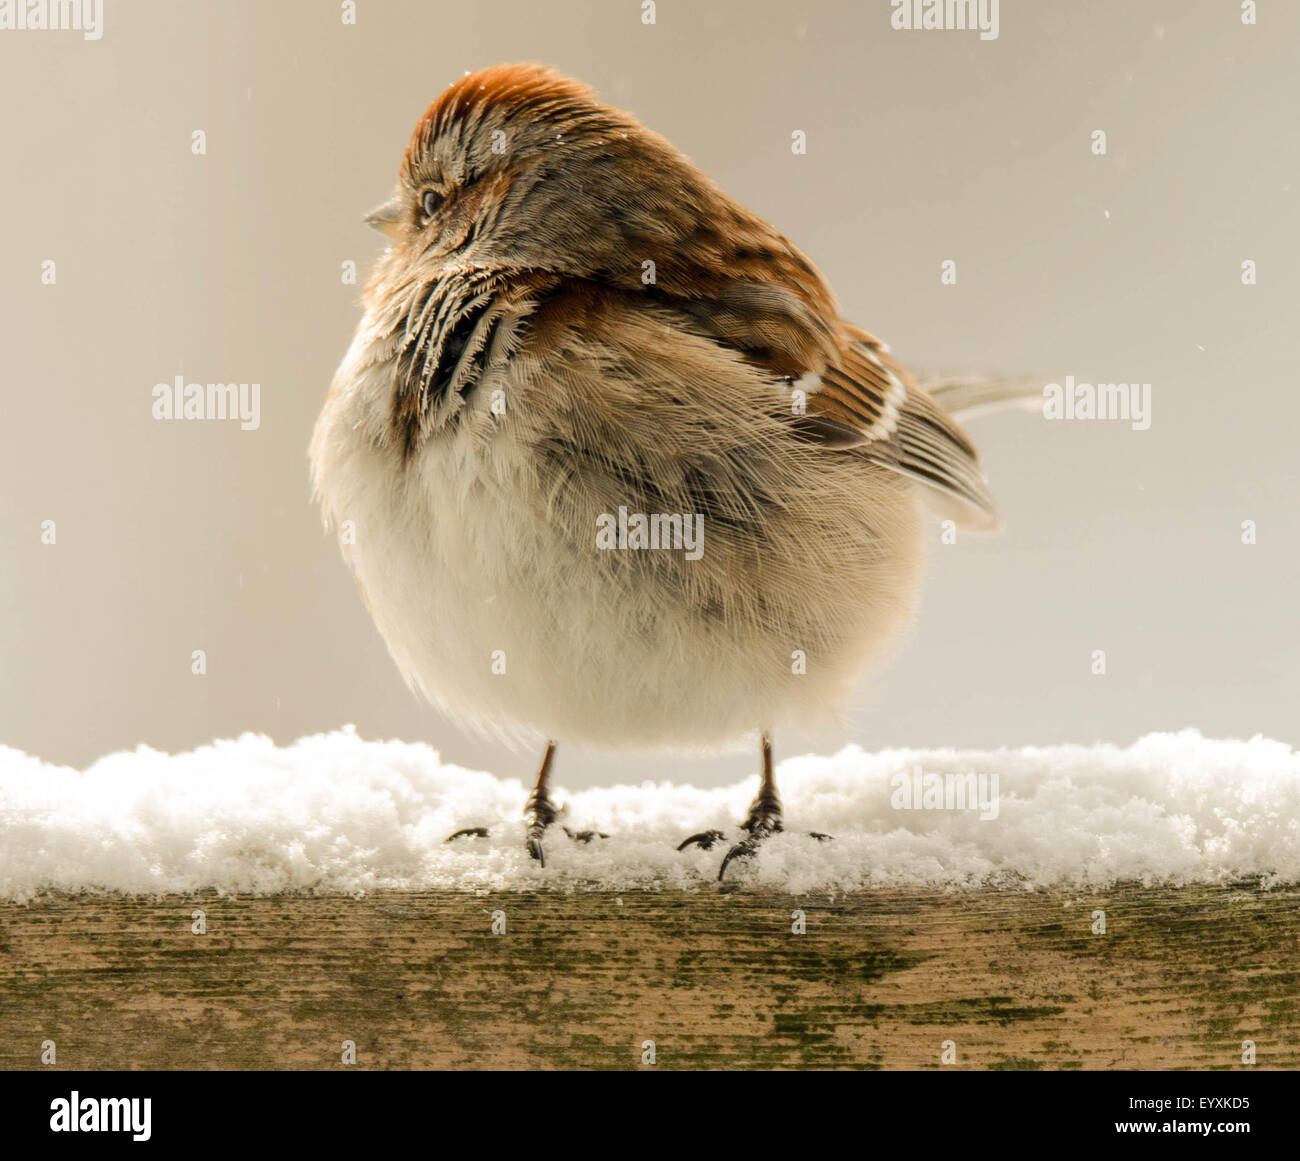 Sparrow gonfi perché era così freddo. Foto Stock